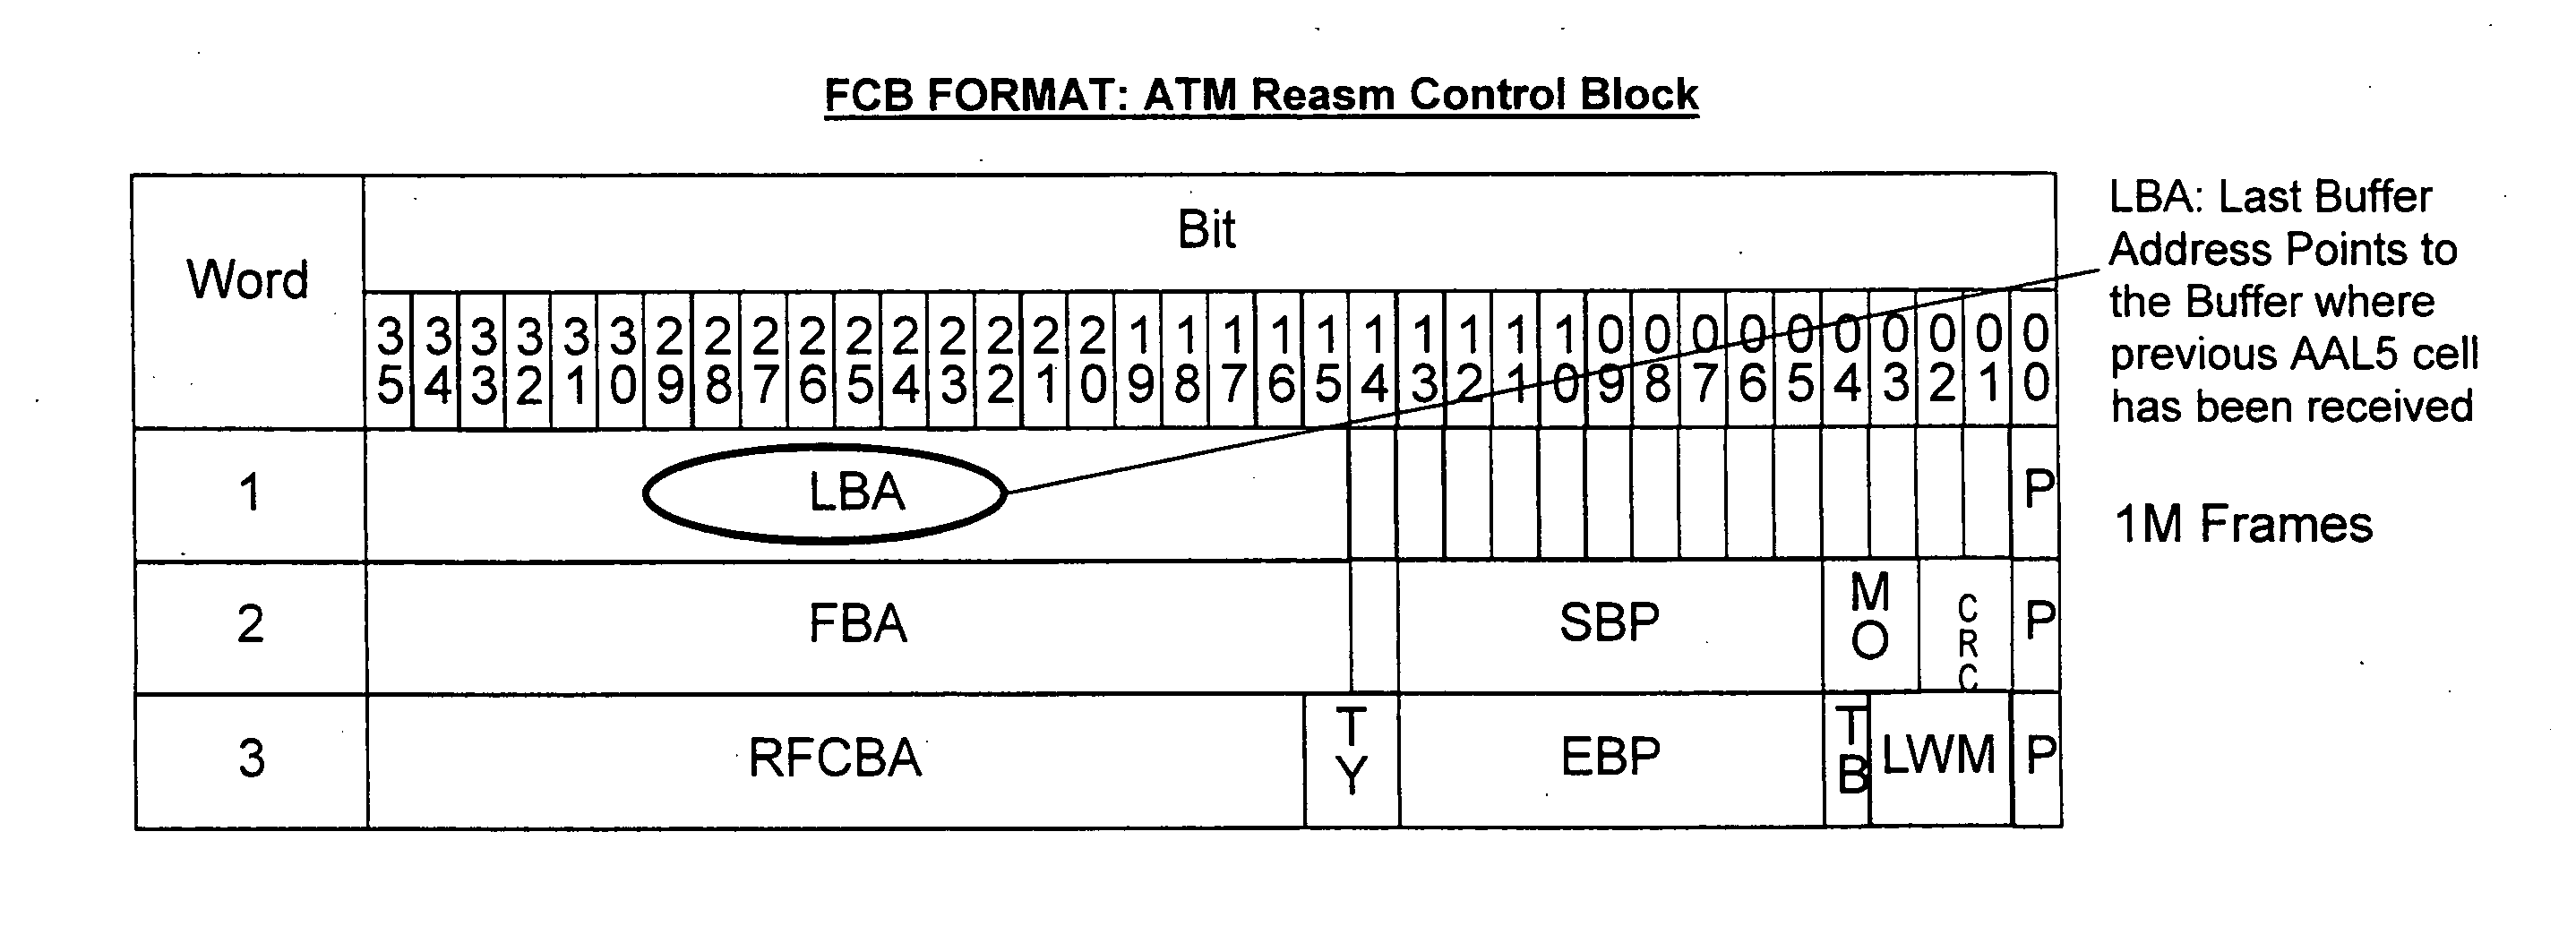 Flexible control block format for frame description and management